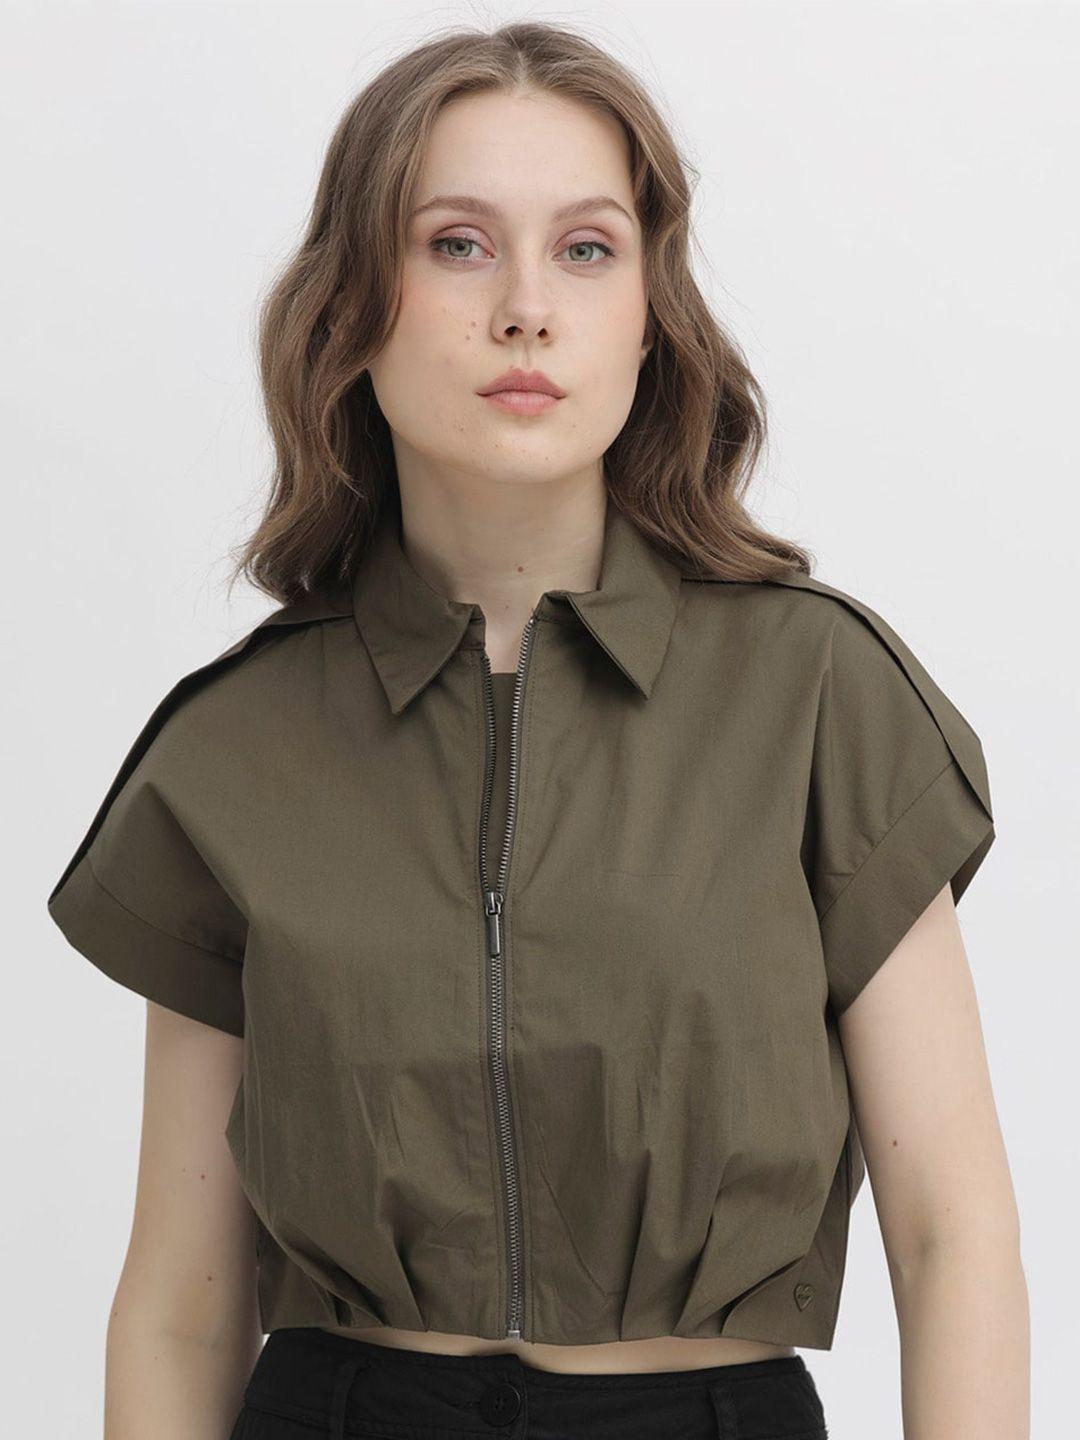 rareism-shirt-collar-extended-sleeves-crop-shirt-style-cotton-top